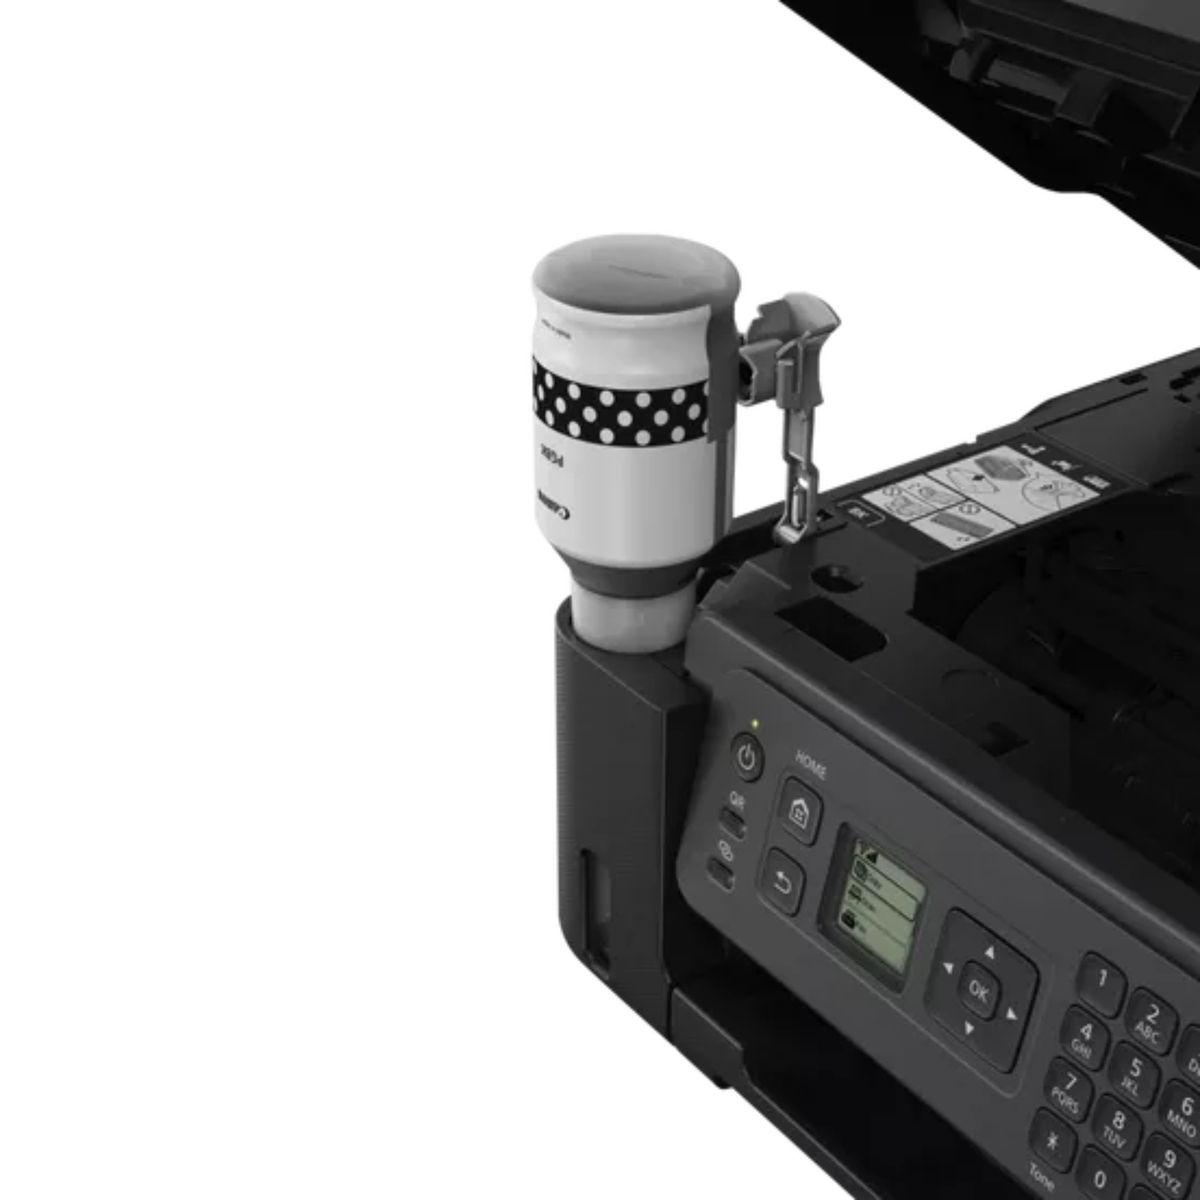 Canon Ink Tank Printer, Black, Pixma G4470